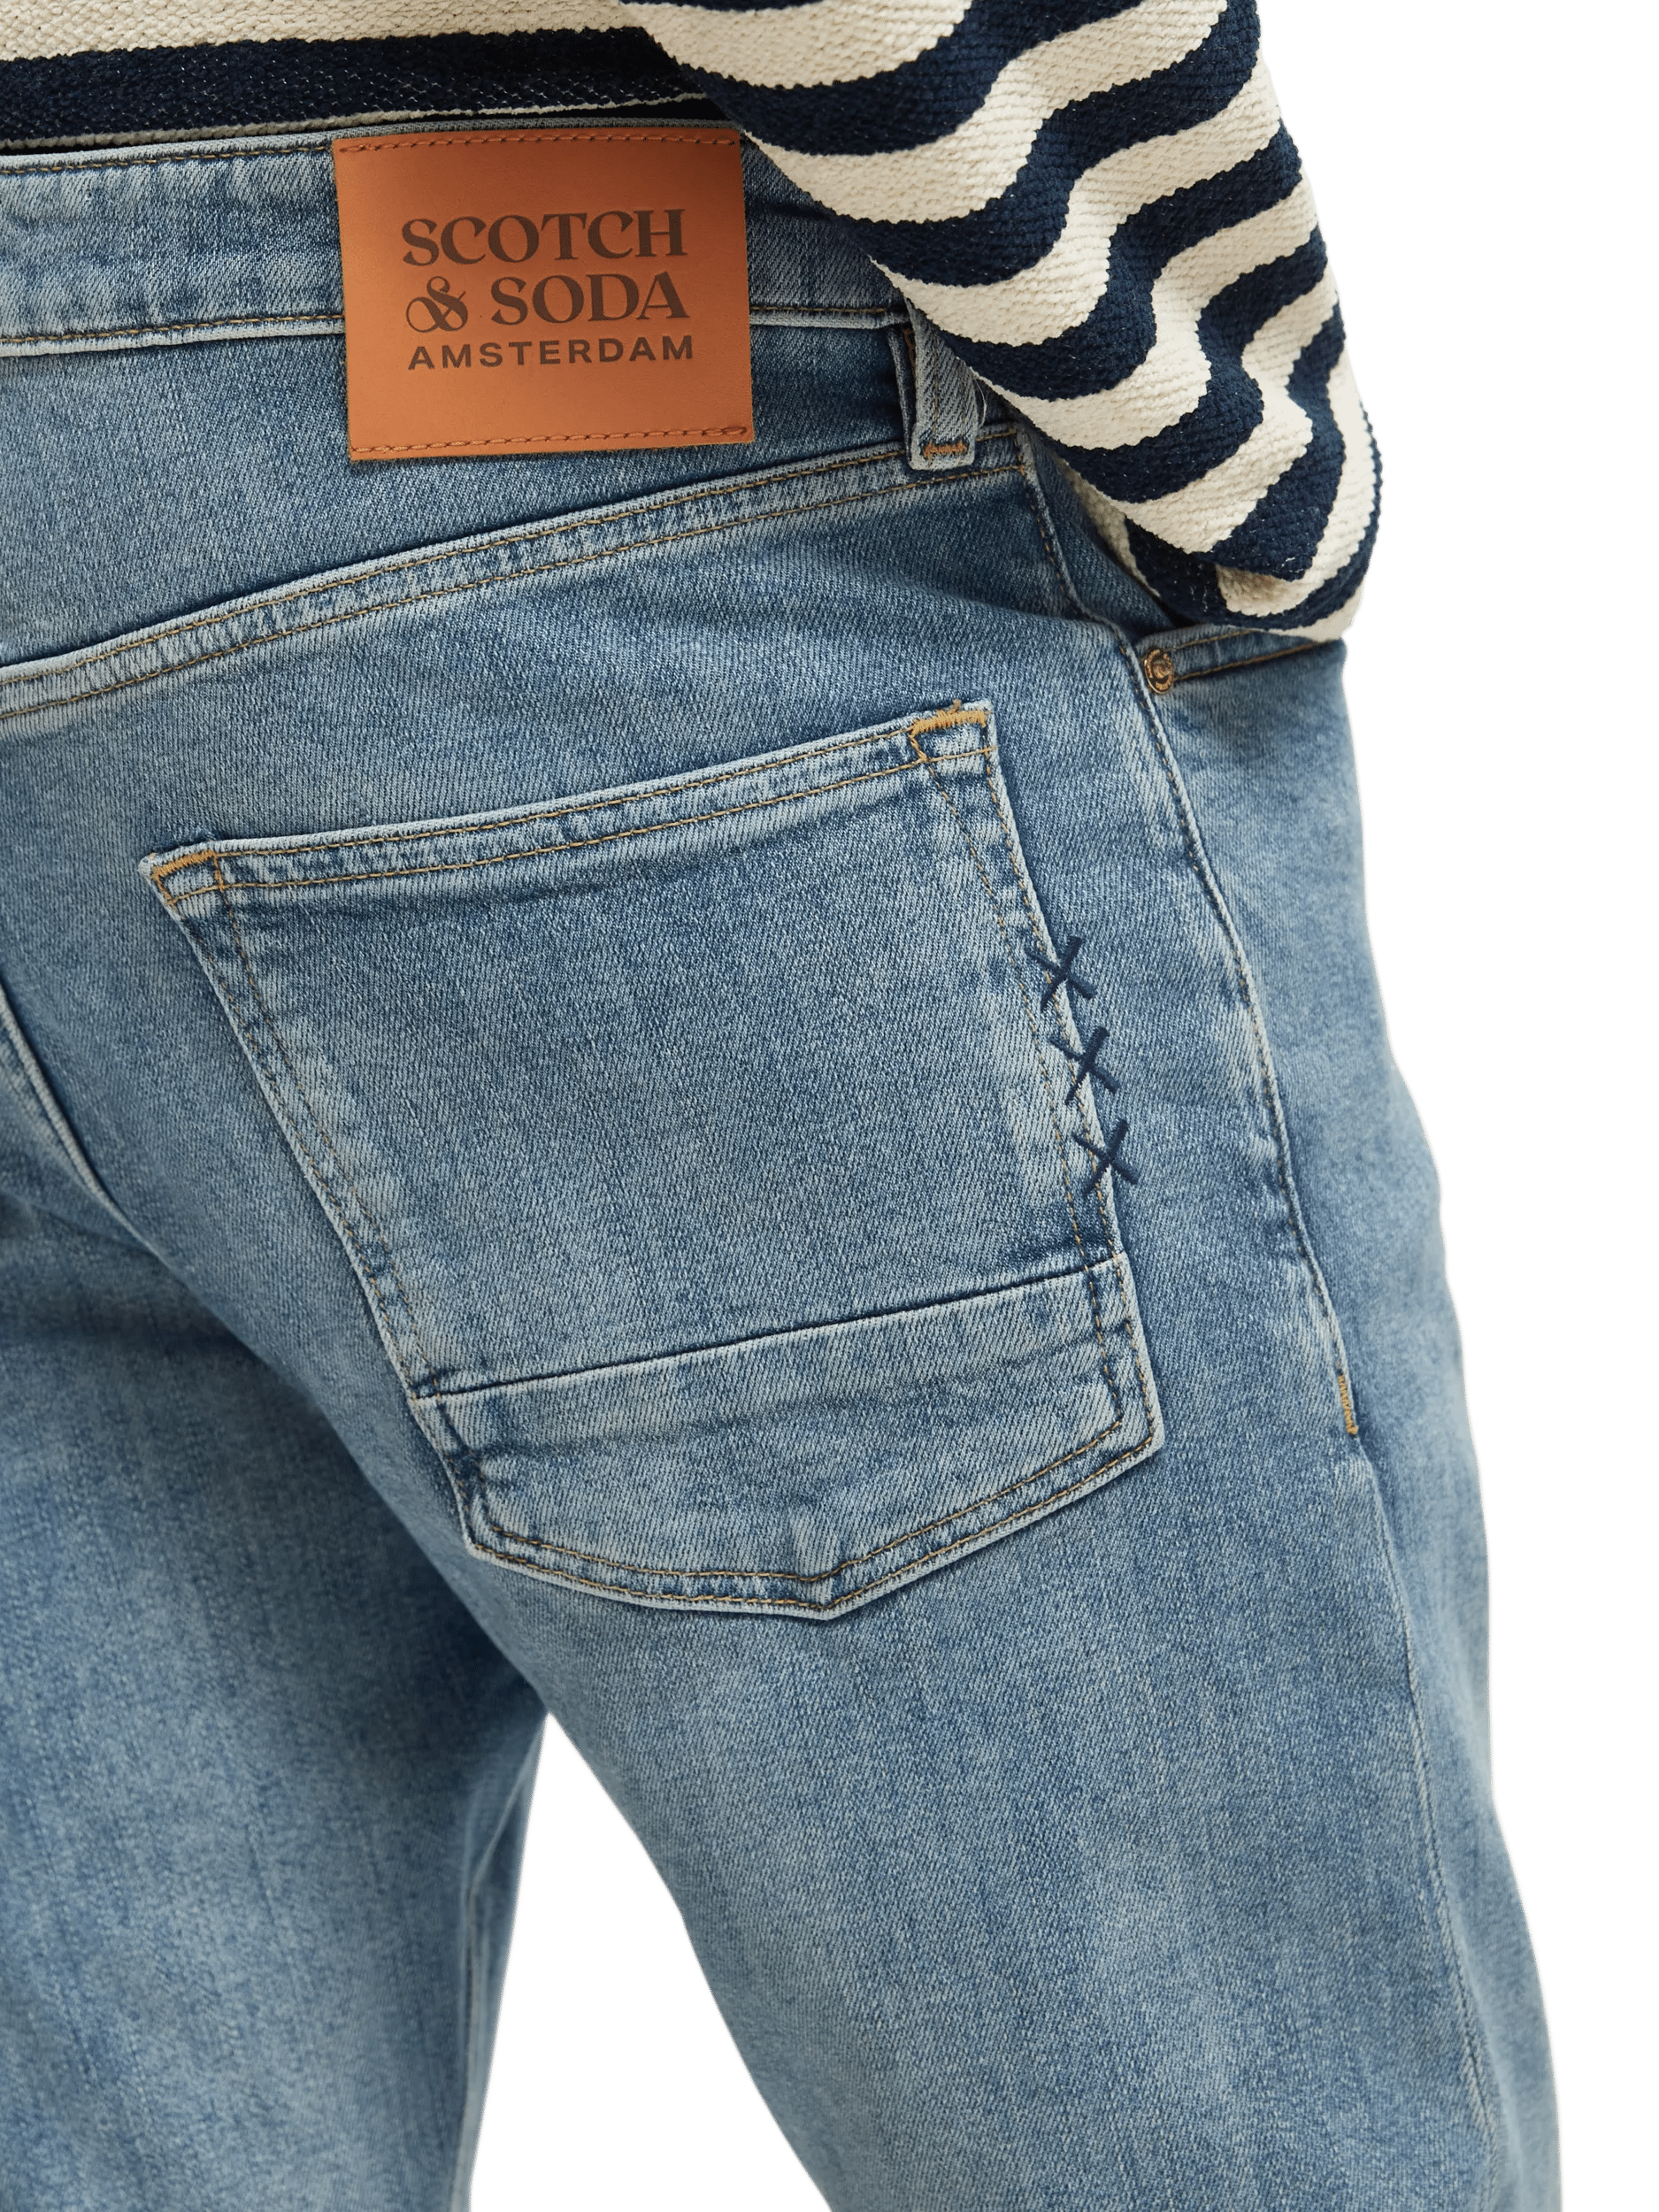 Scotch & Soda The Ralston Regular Slim Fit Jeans – Aqua Blue FIT-DTL1